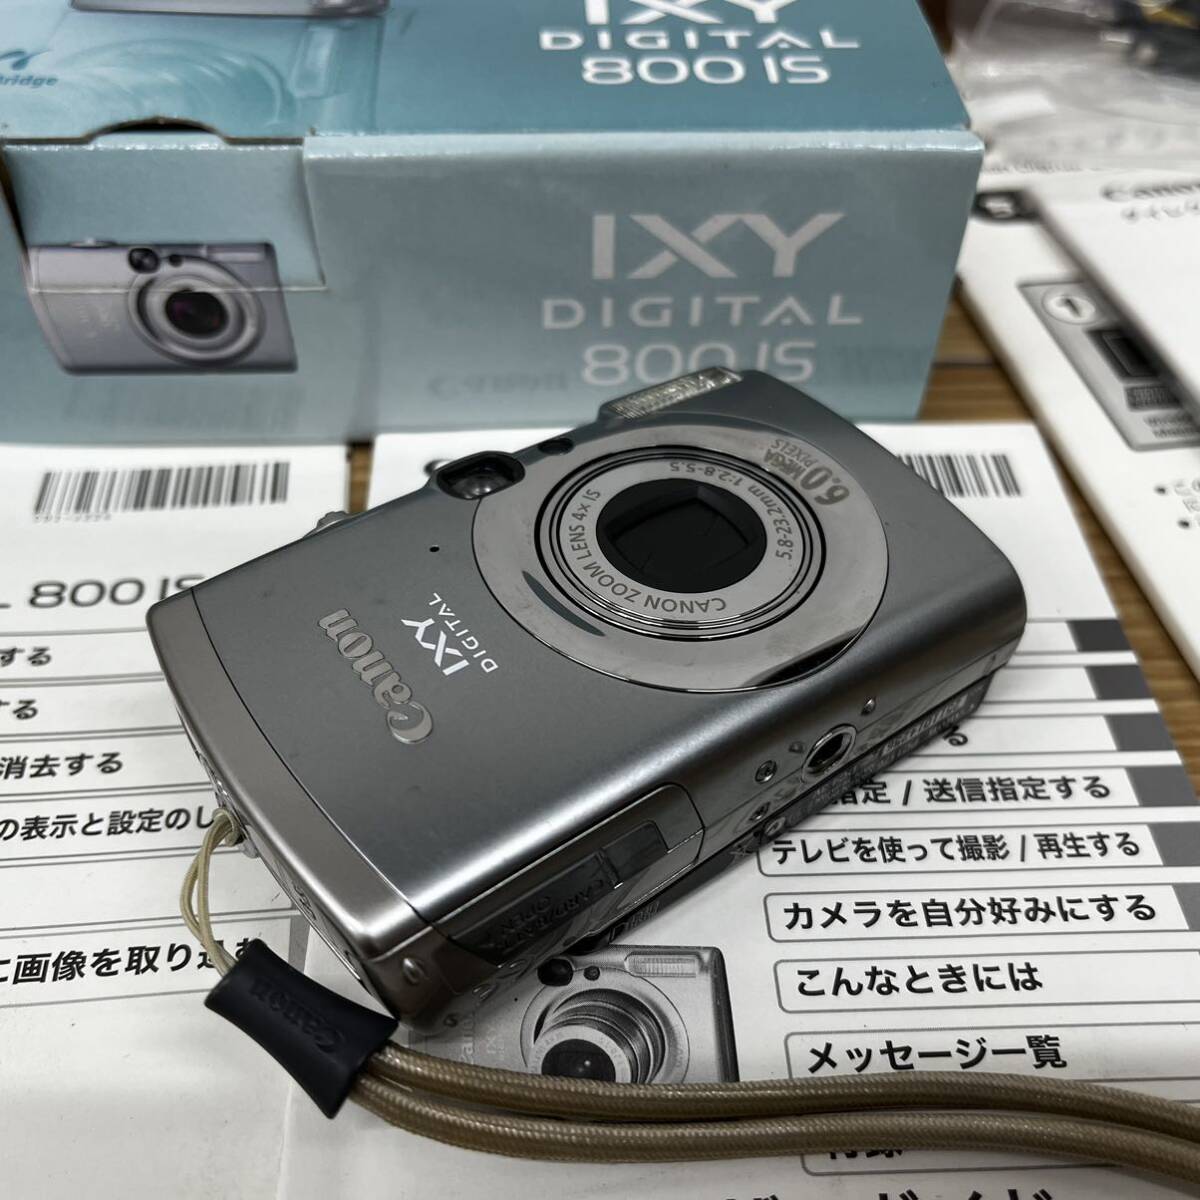 ka026 CANON Canon цифровая камера цифровая камера IXY DEGITAL 800IS PC1176